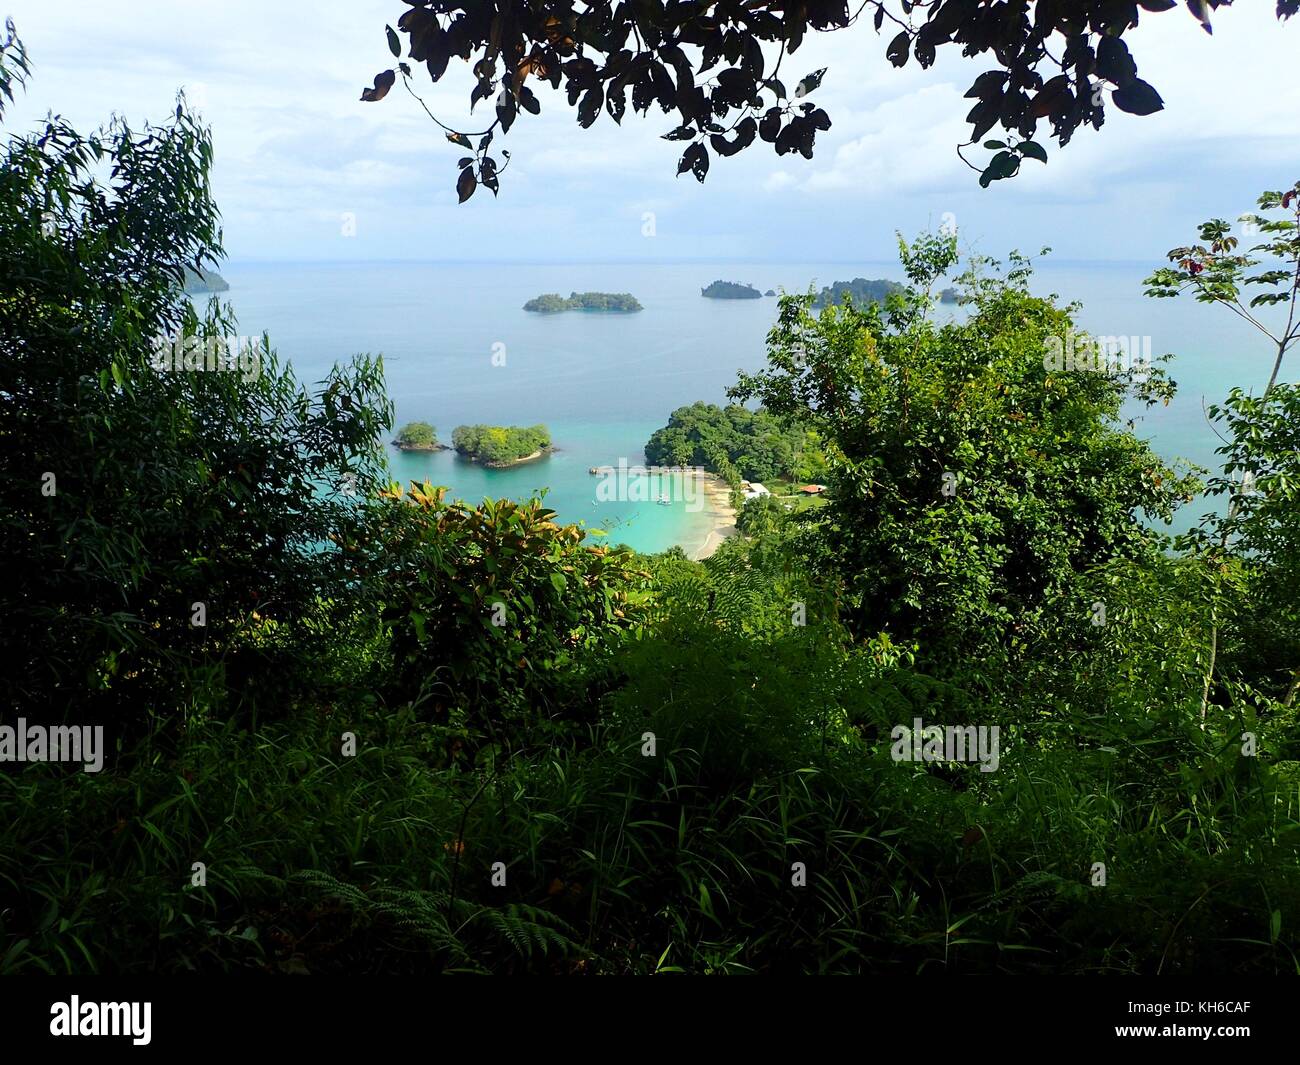 A view from elevatep point over beach in Parque Nacional de Isla Coiba, Panama. Stock Photo